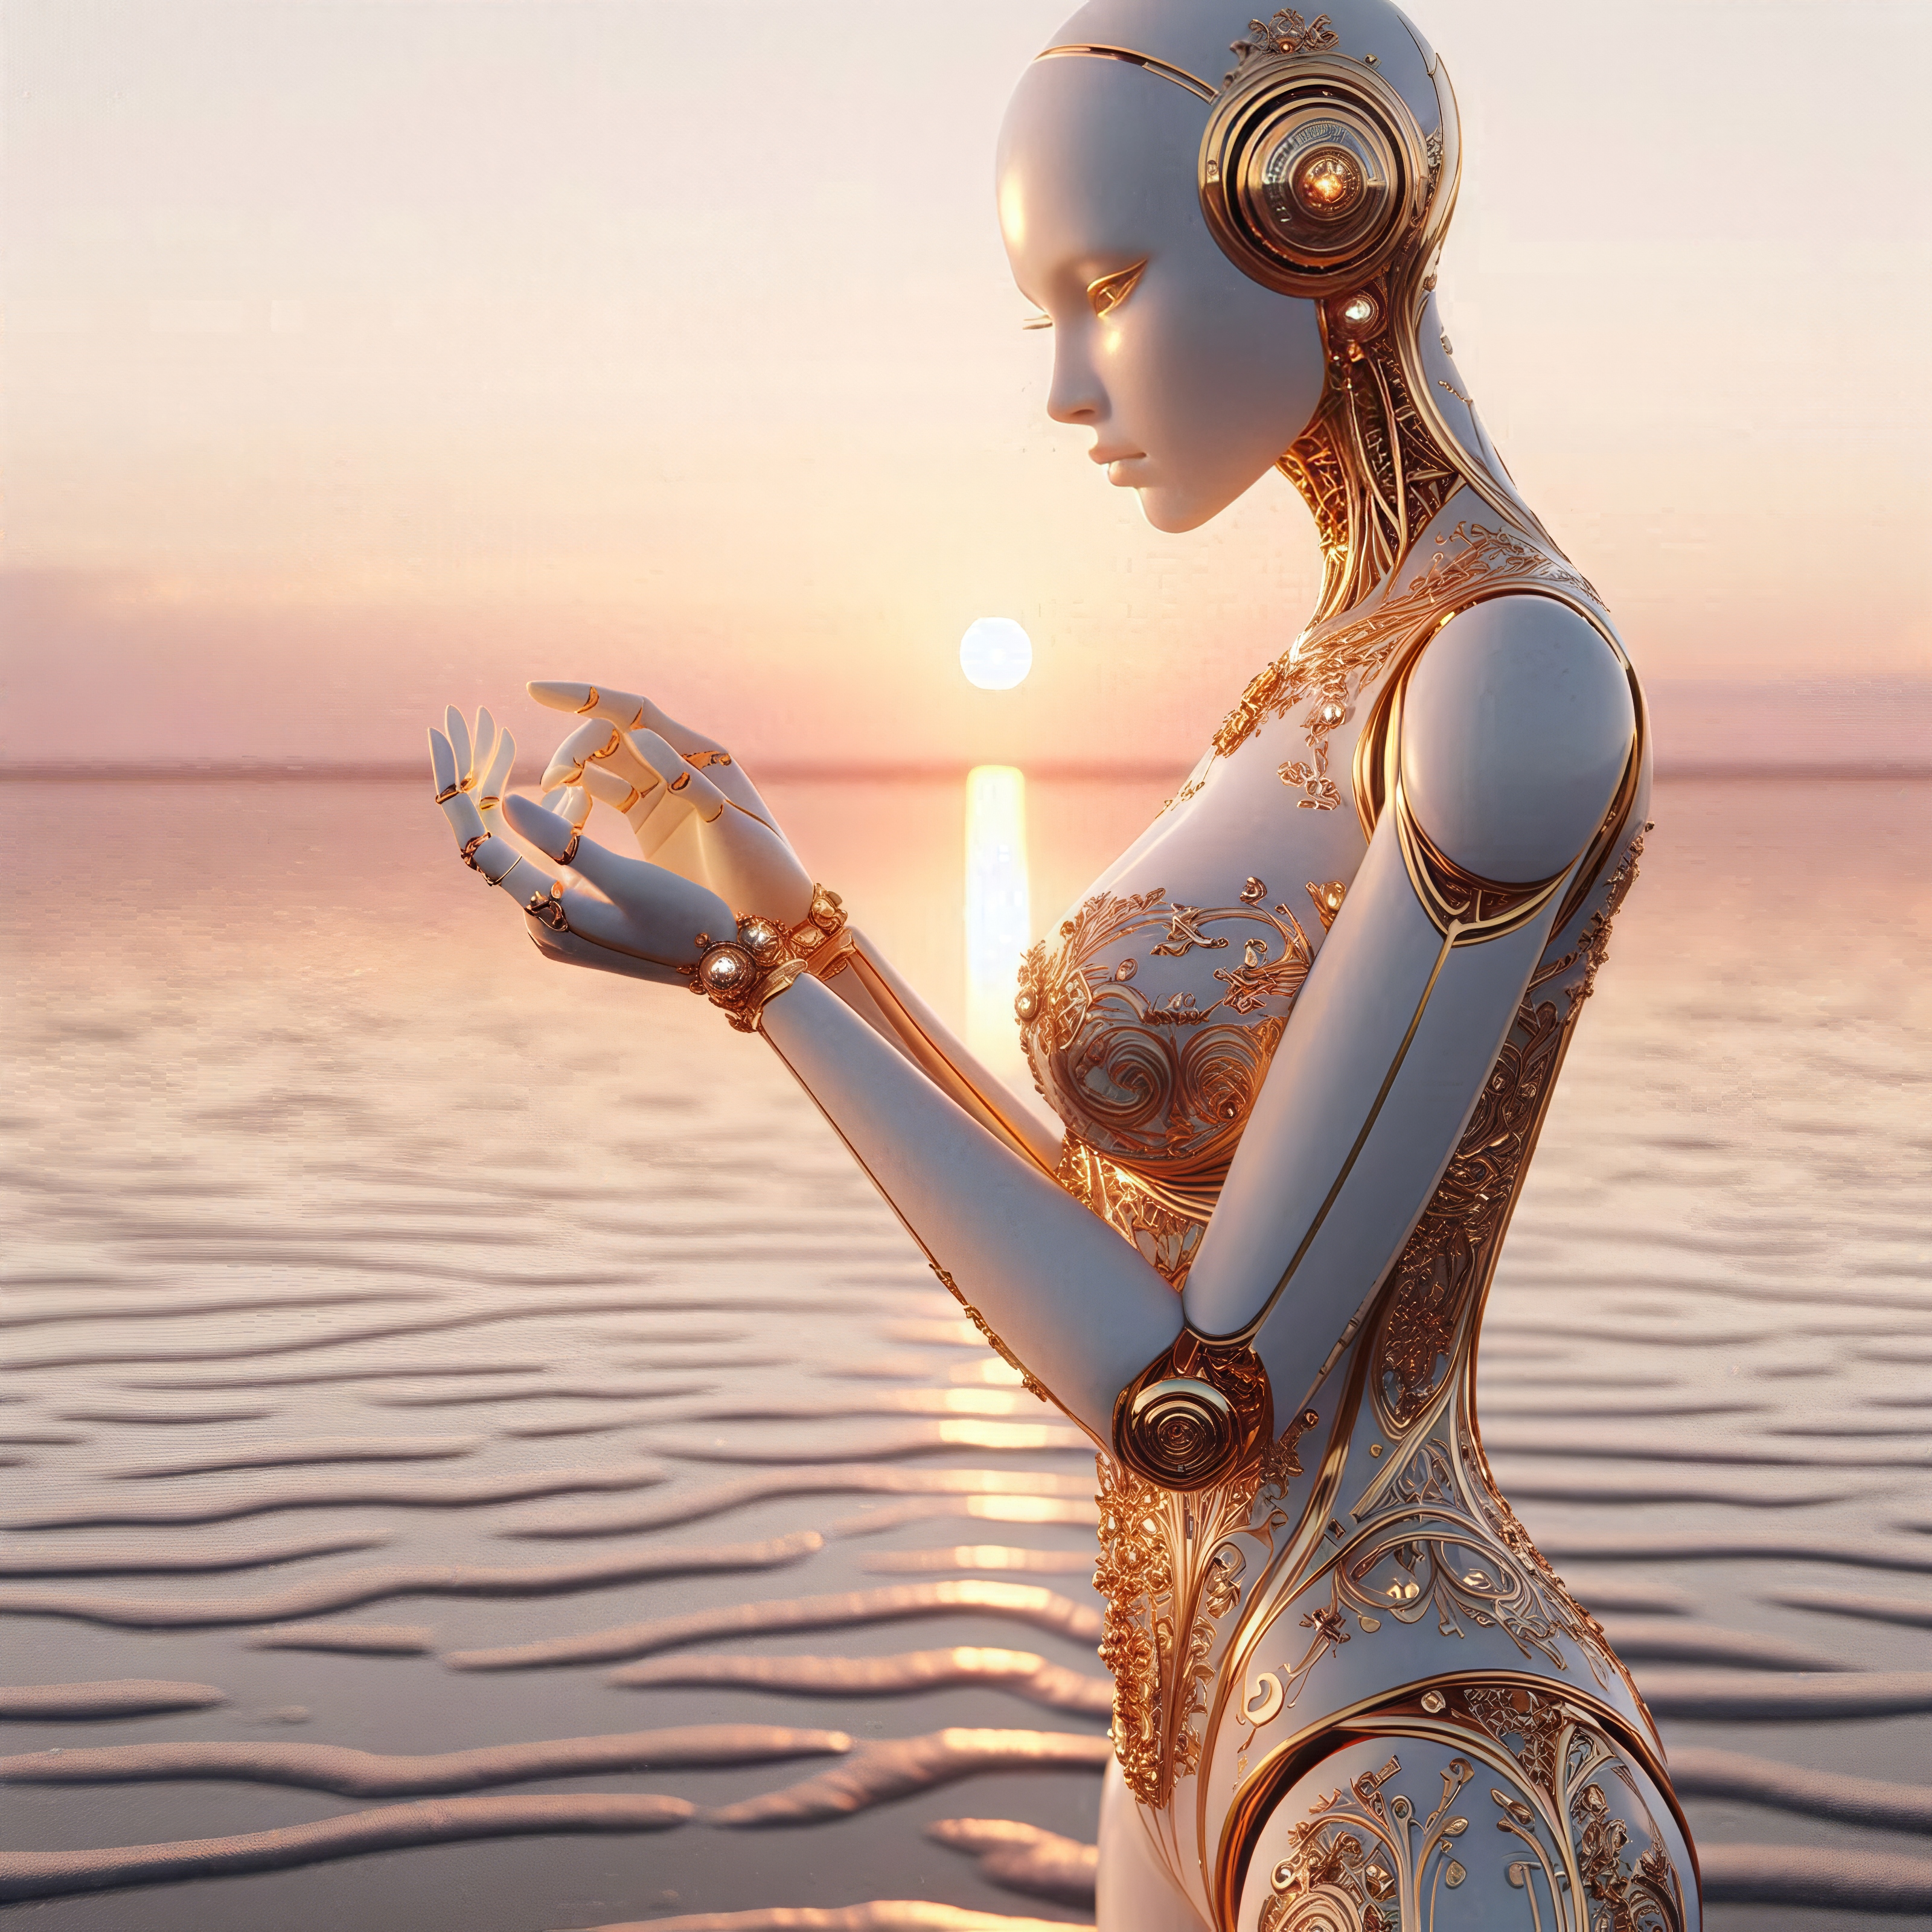 General 3200x3200 AI art fantasy art robot Porcelain gold